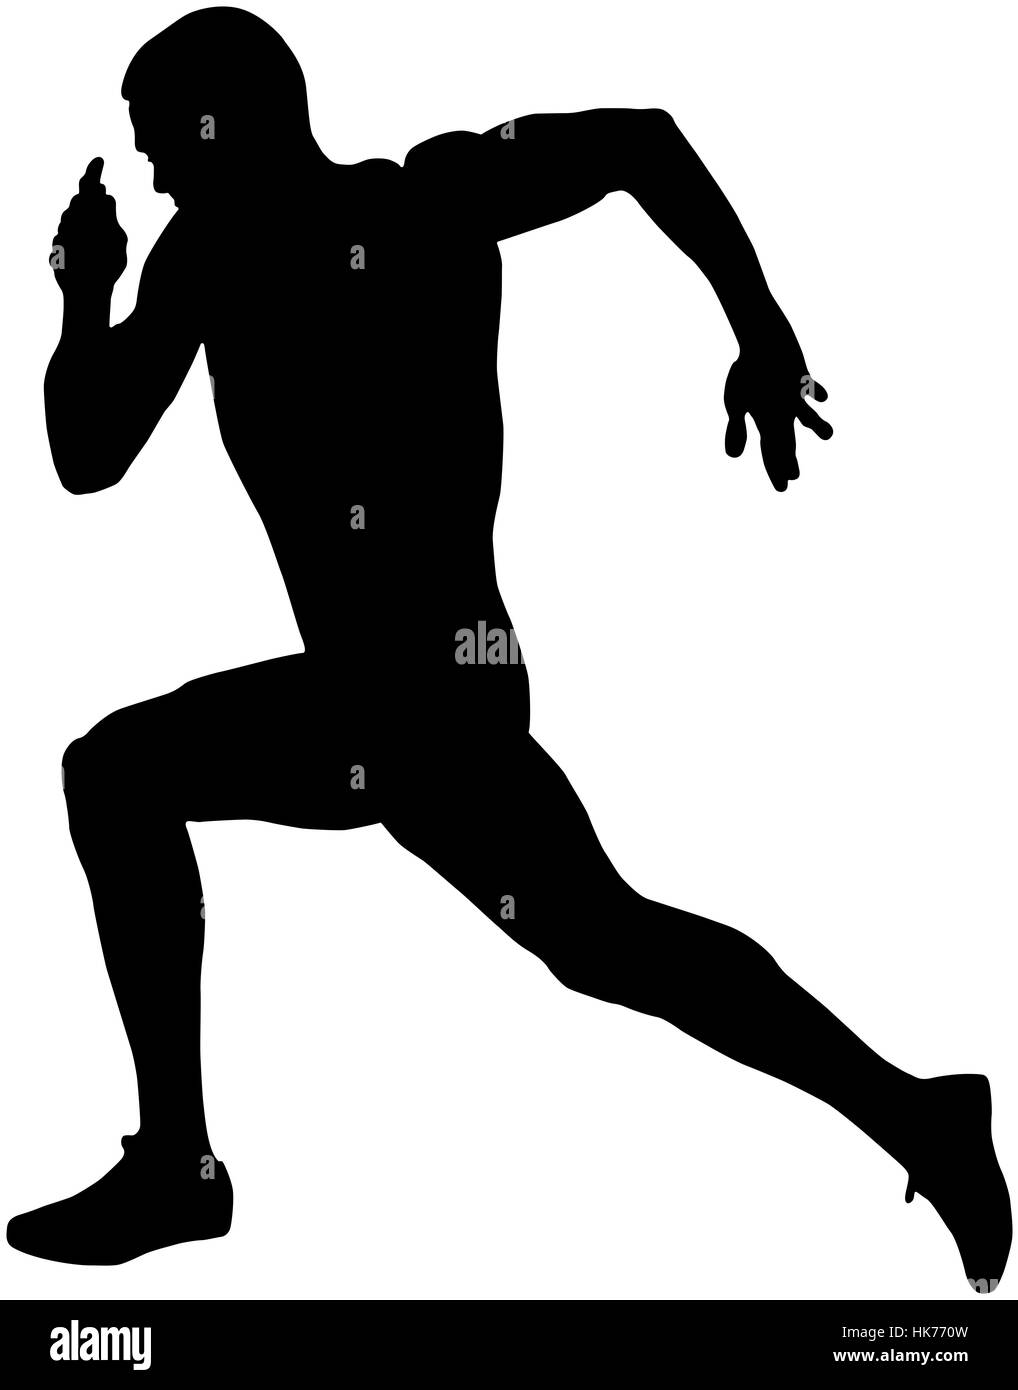 speed running muscular athlete runner black silhouette Stock Photo